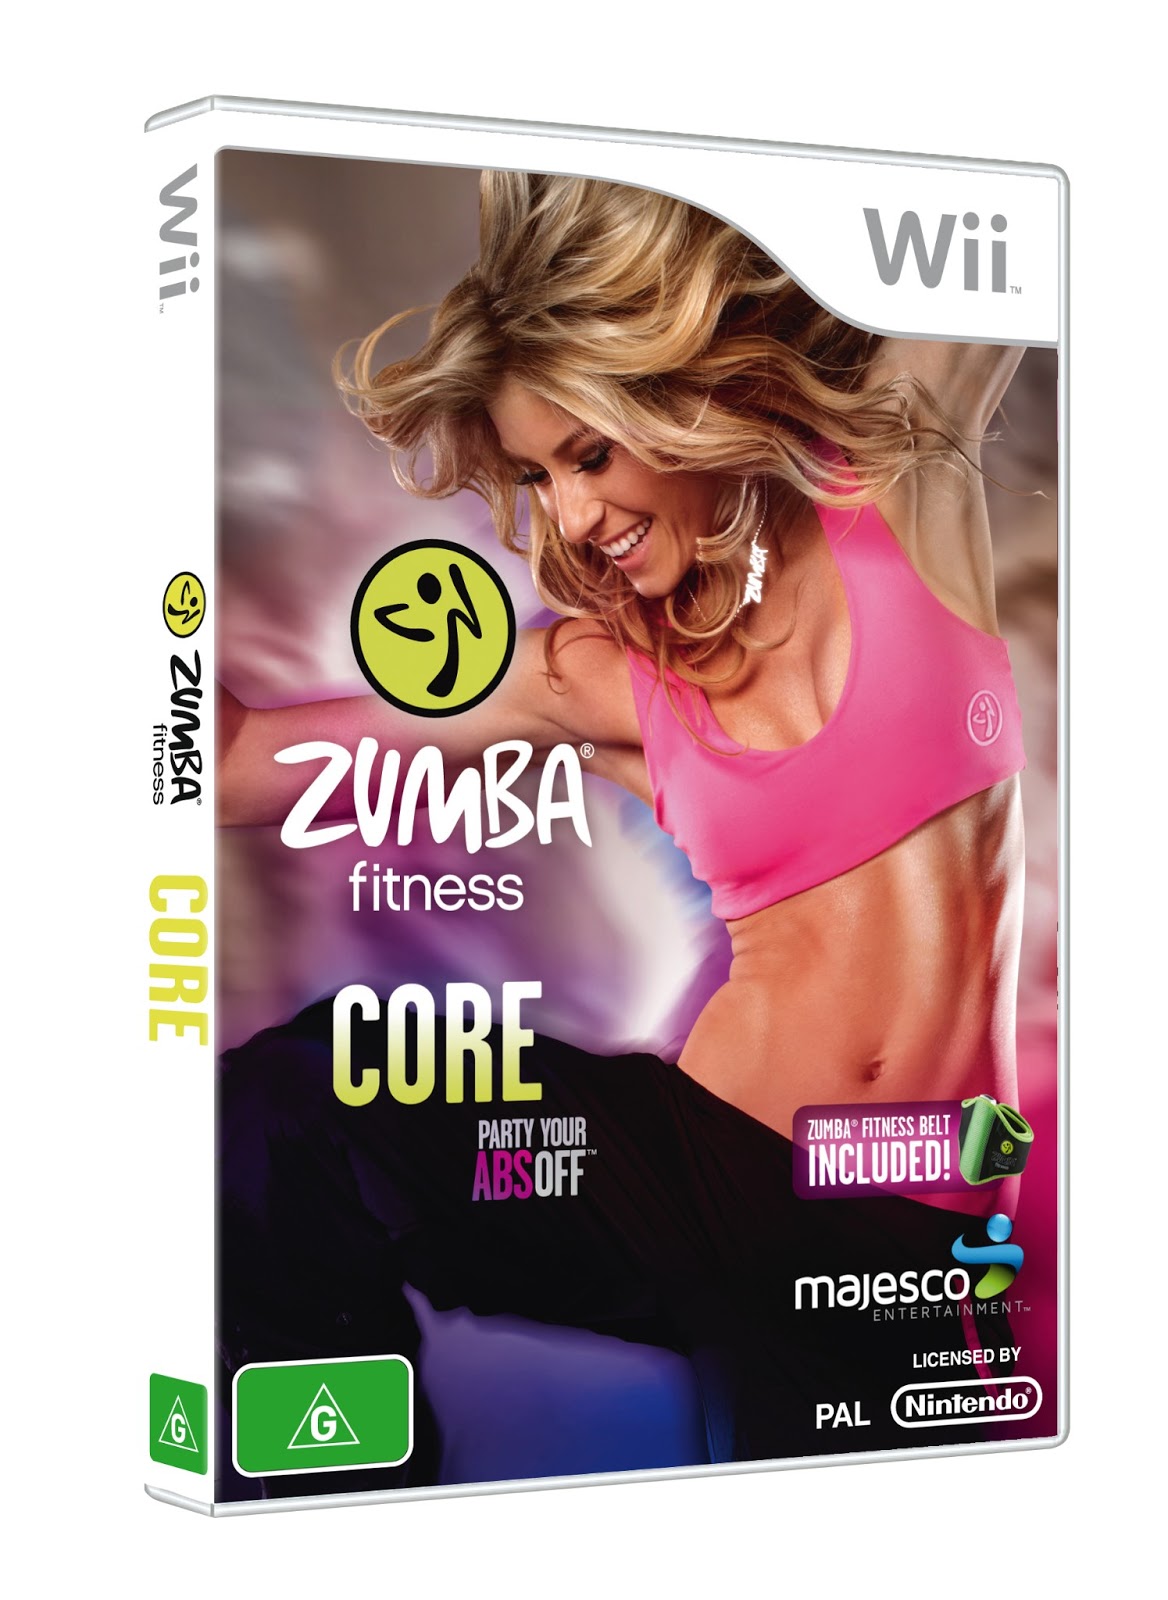 Wii Fitness Zumba Songs